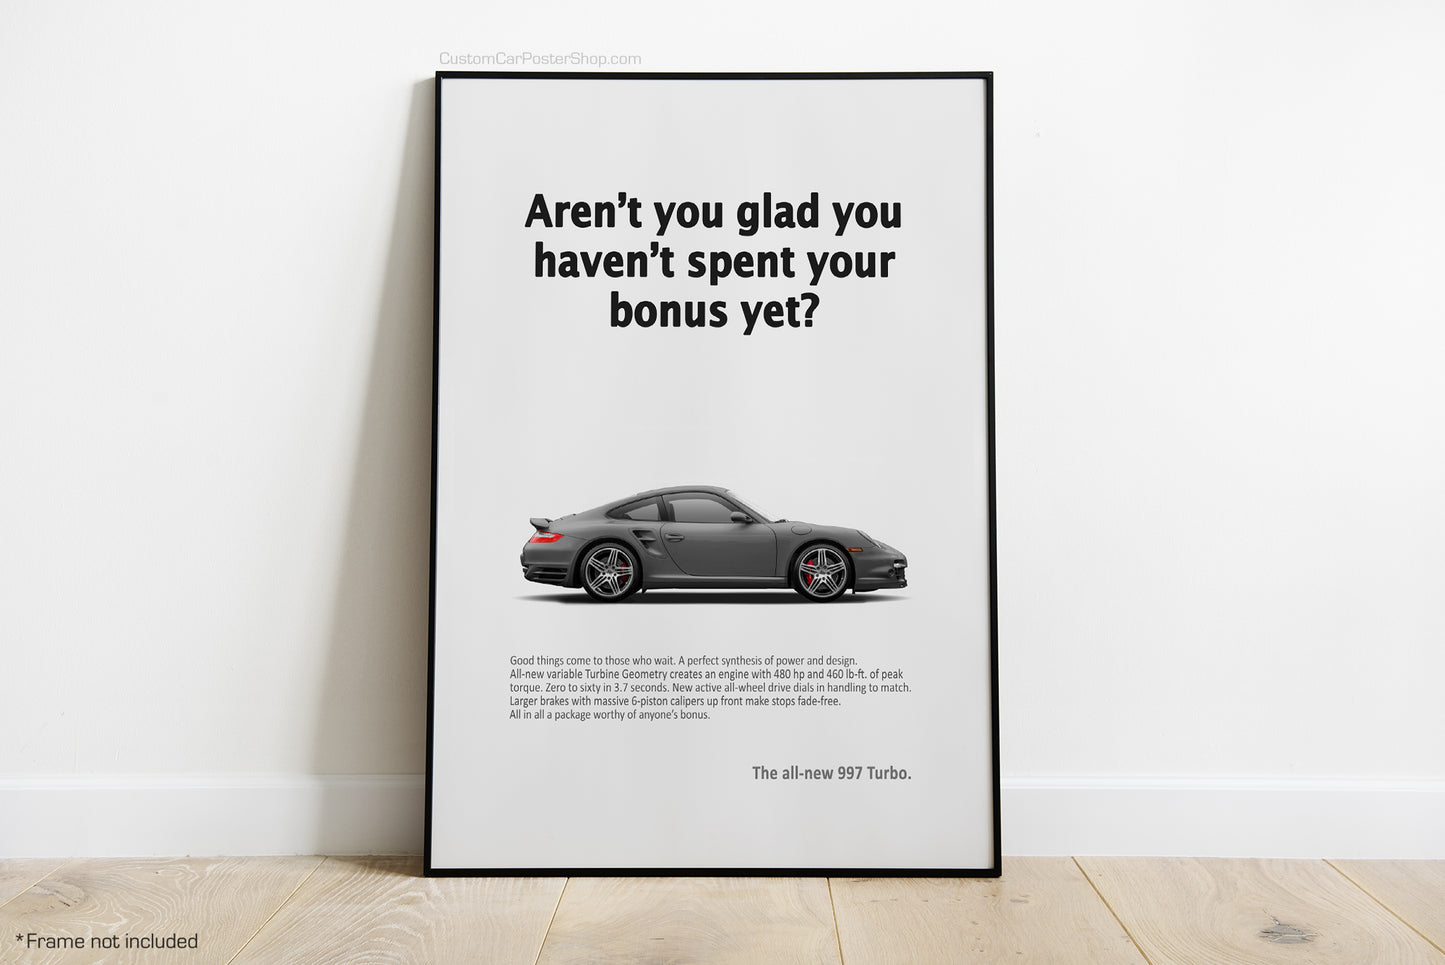 Porsche 911 (997) Turbo Vintage Porsche Ads - Spent Your Bonus